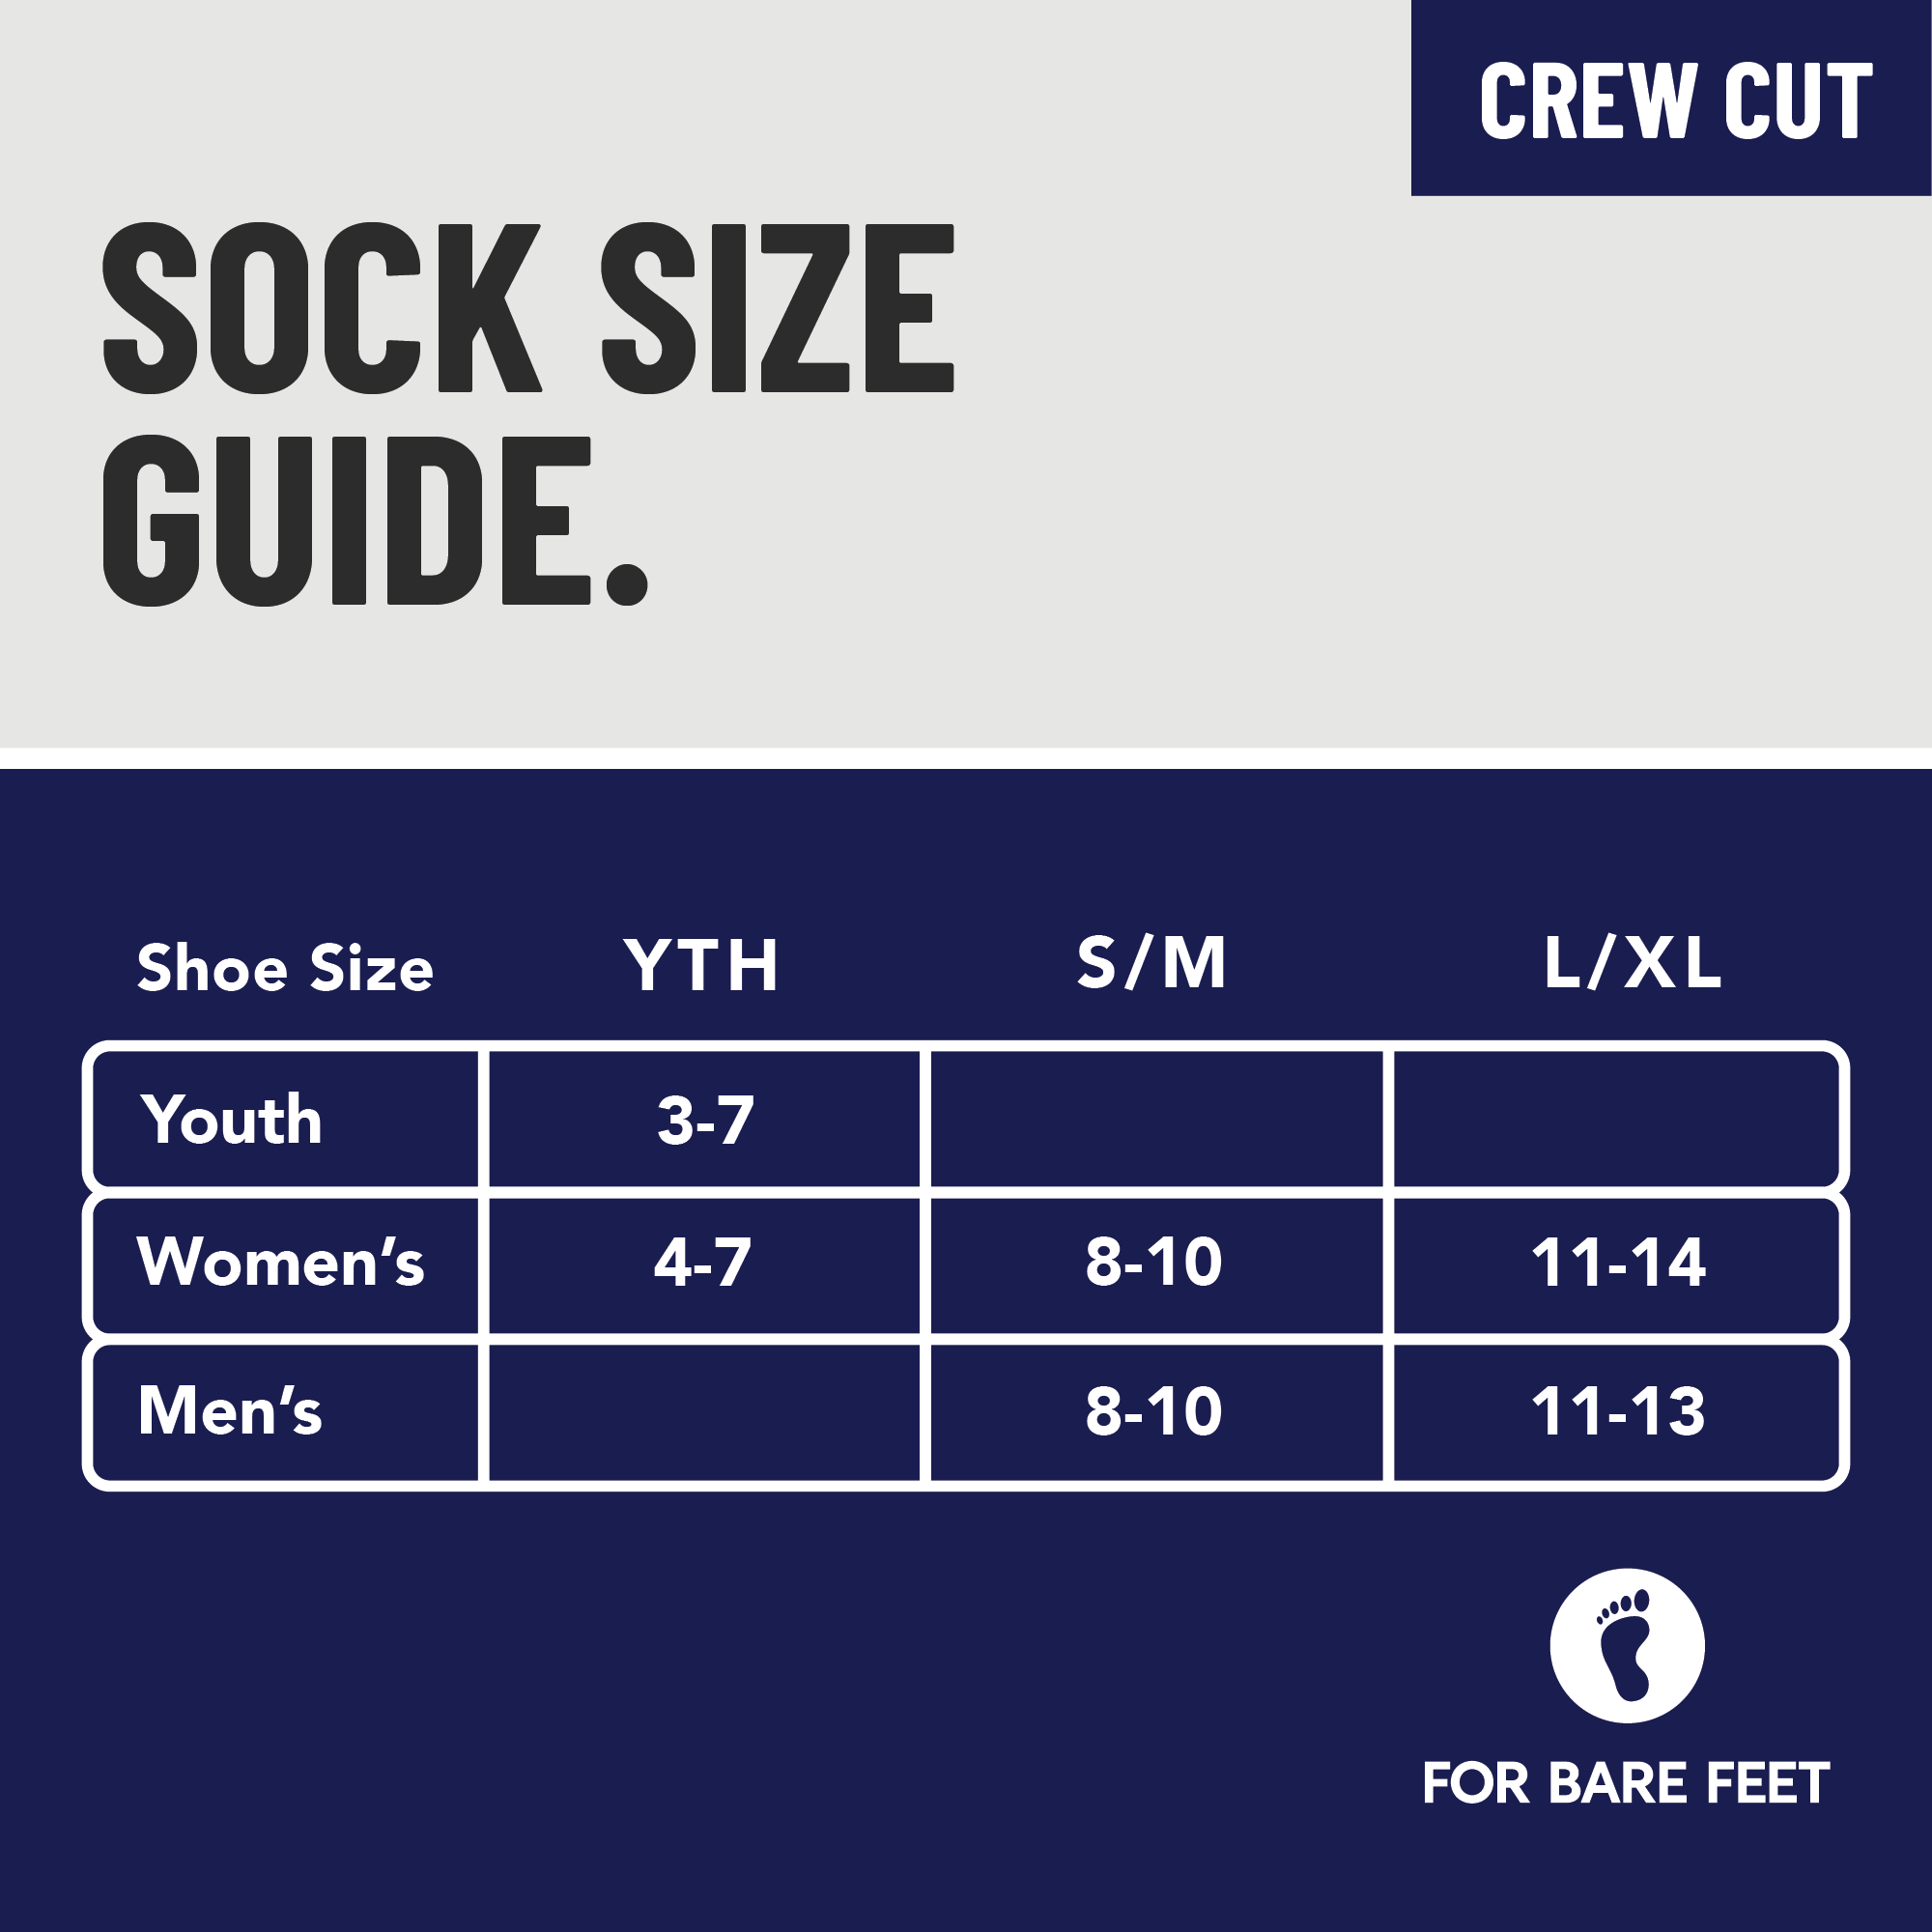 Premium Crew Socks Grey